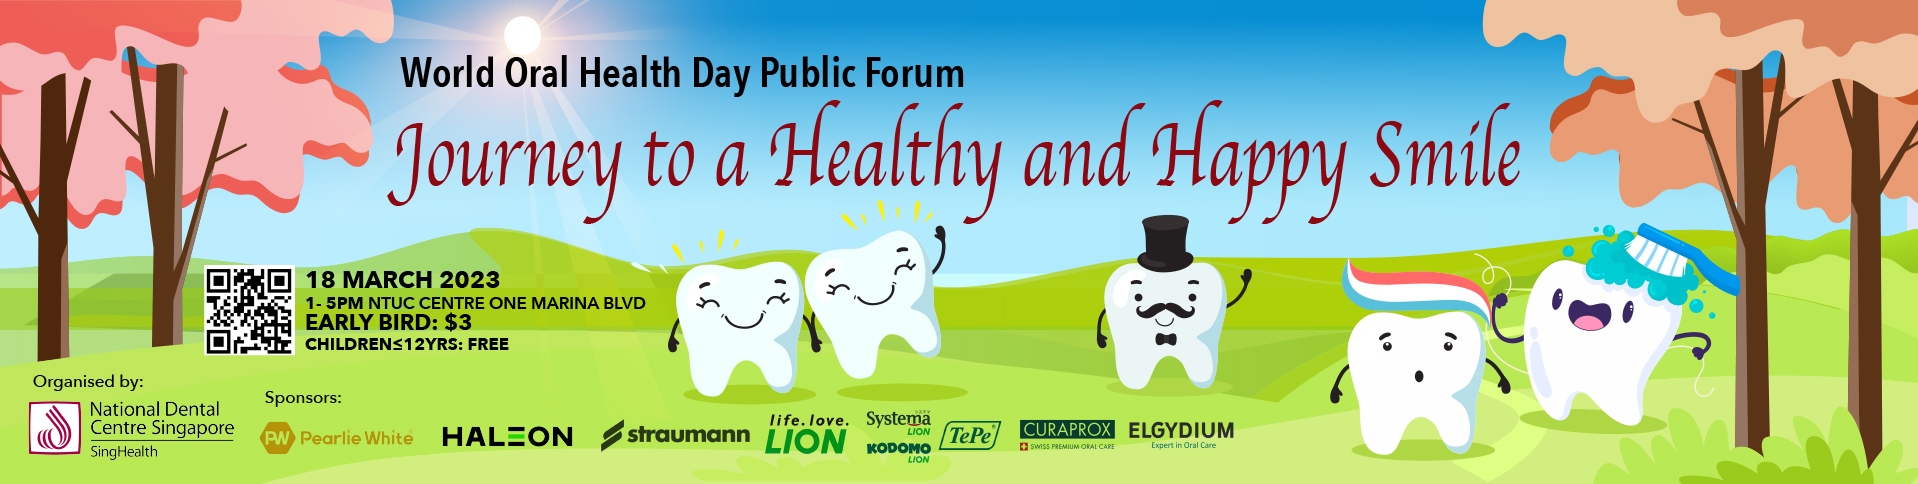 World Oral Health Day Public Forum 2023